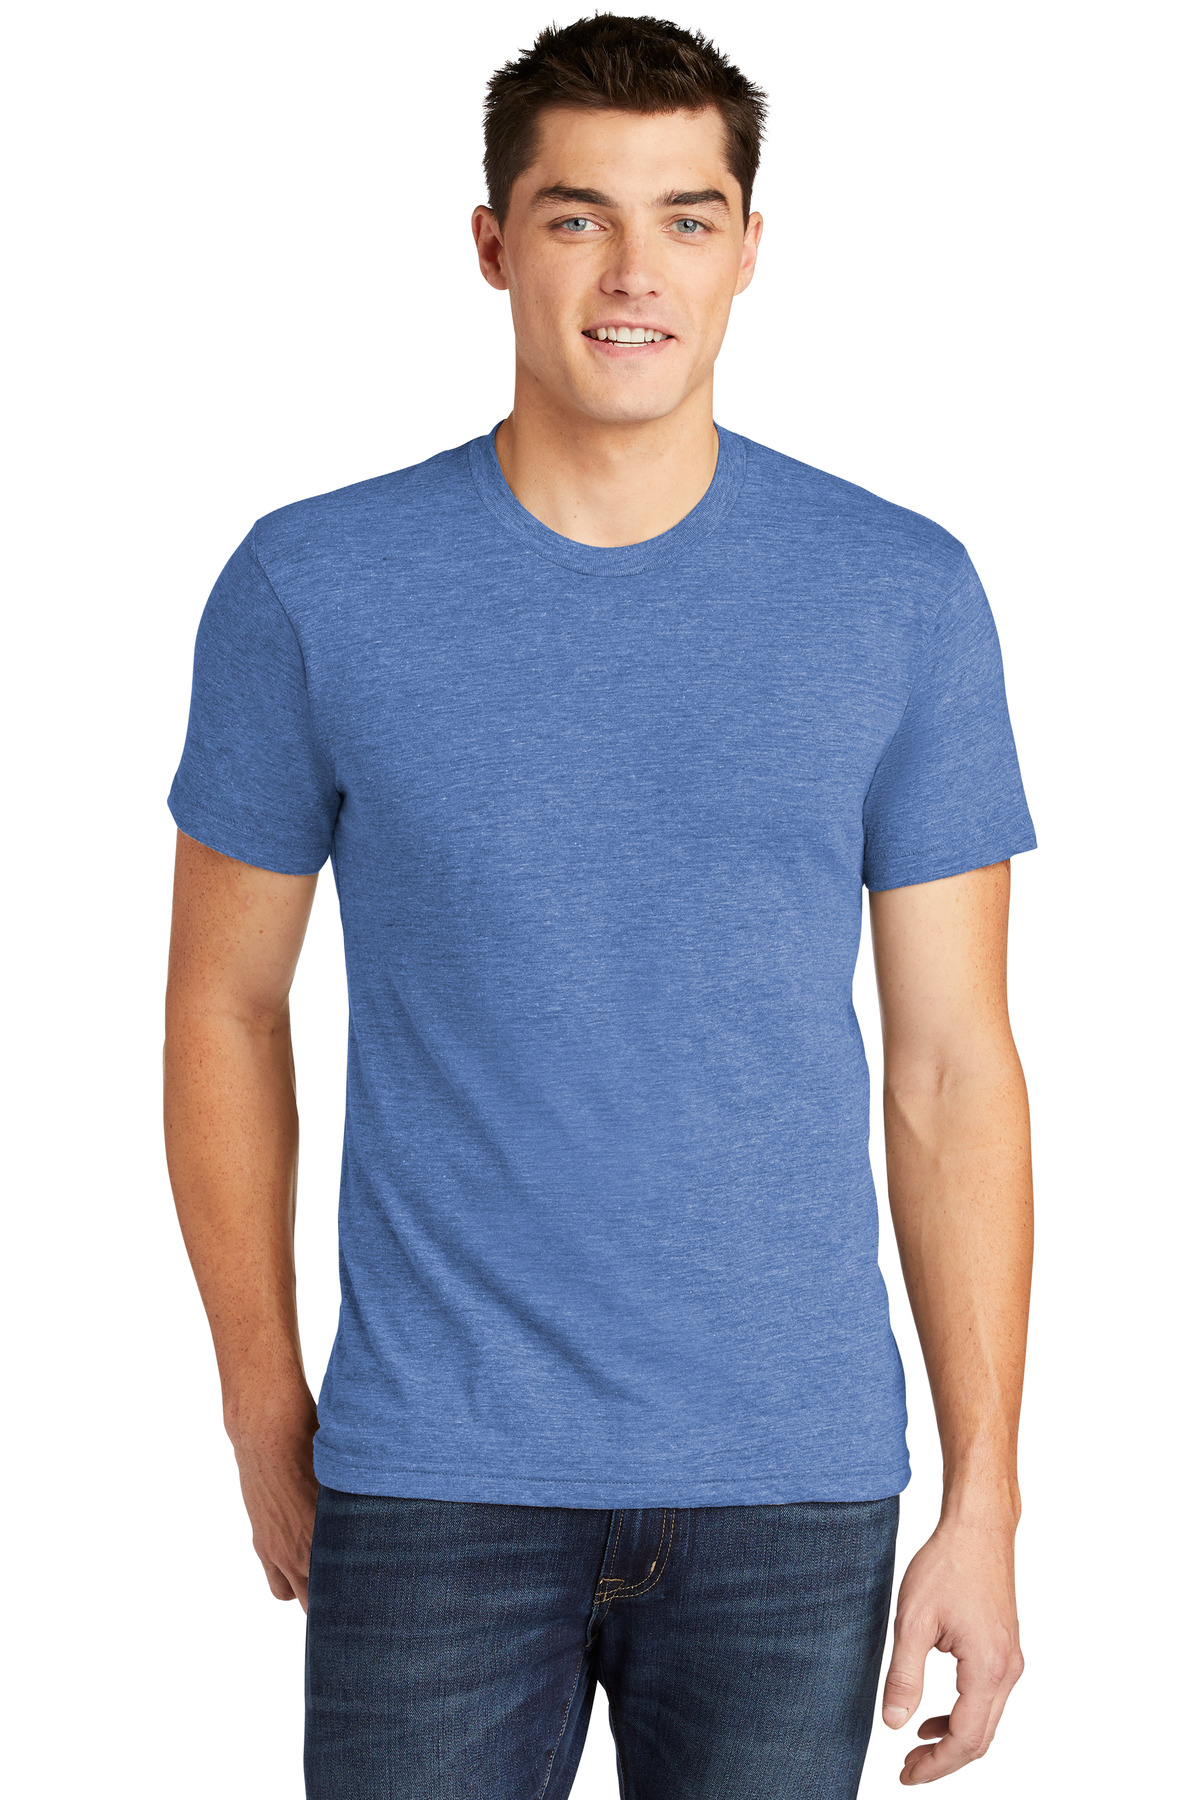 American Apparel Tri-Blend Short Sleeve Track T-Shirt-American Apparel